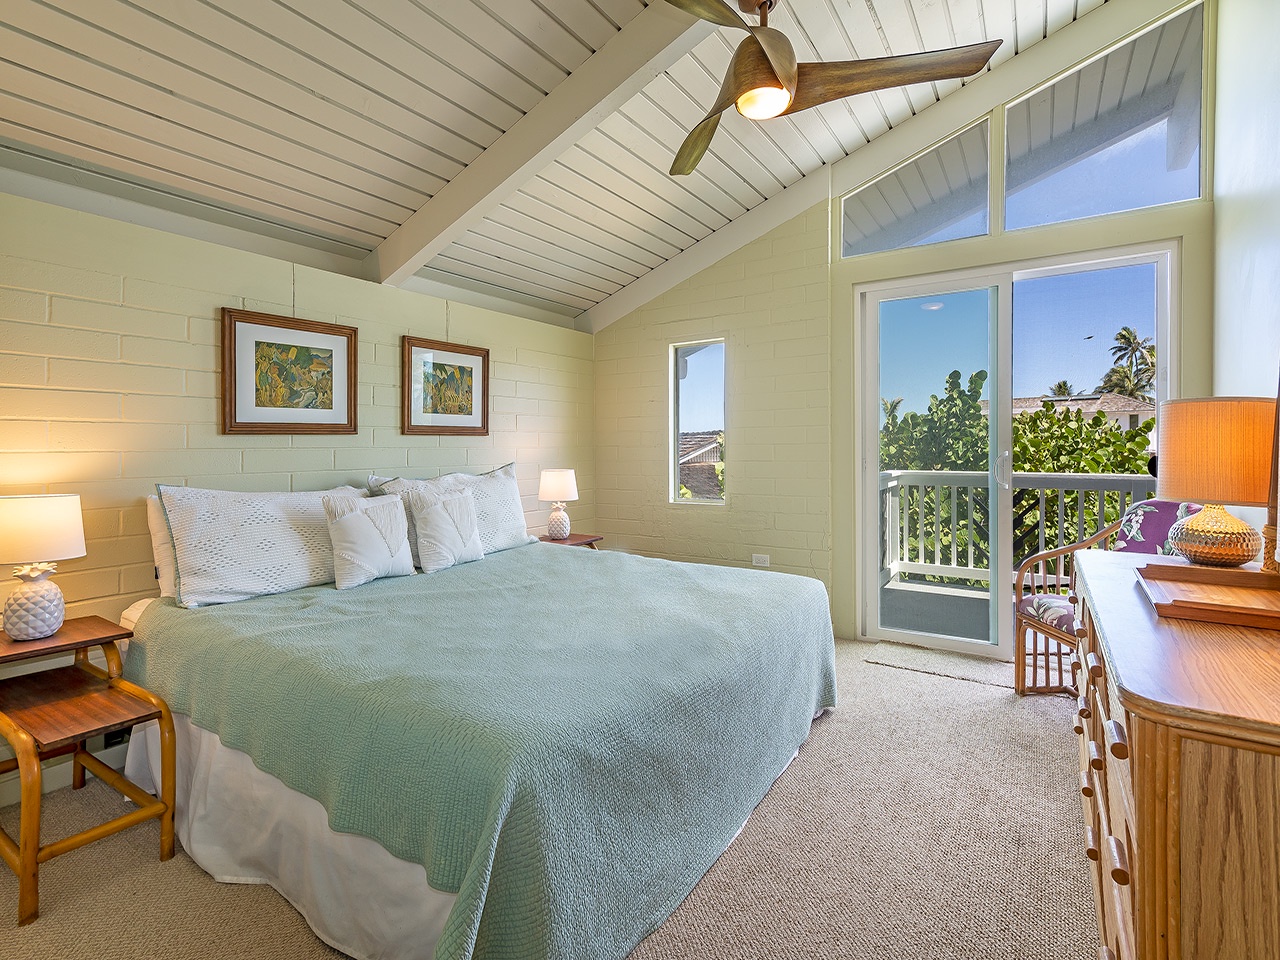 Kailua Vacation Rentals, Hale Kalio - King bedroom